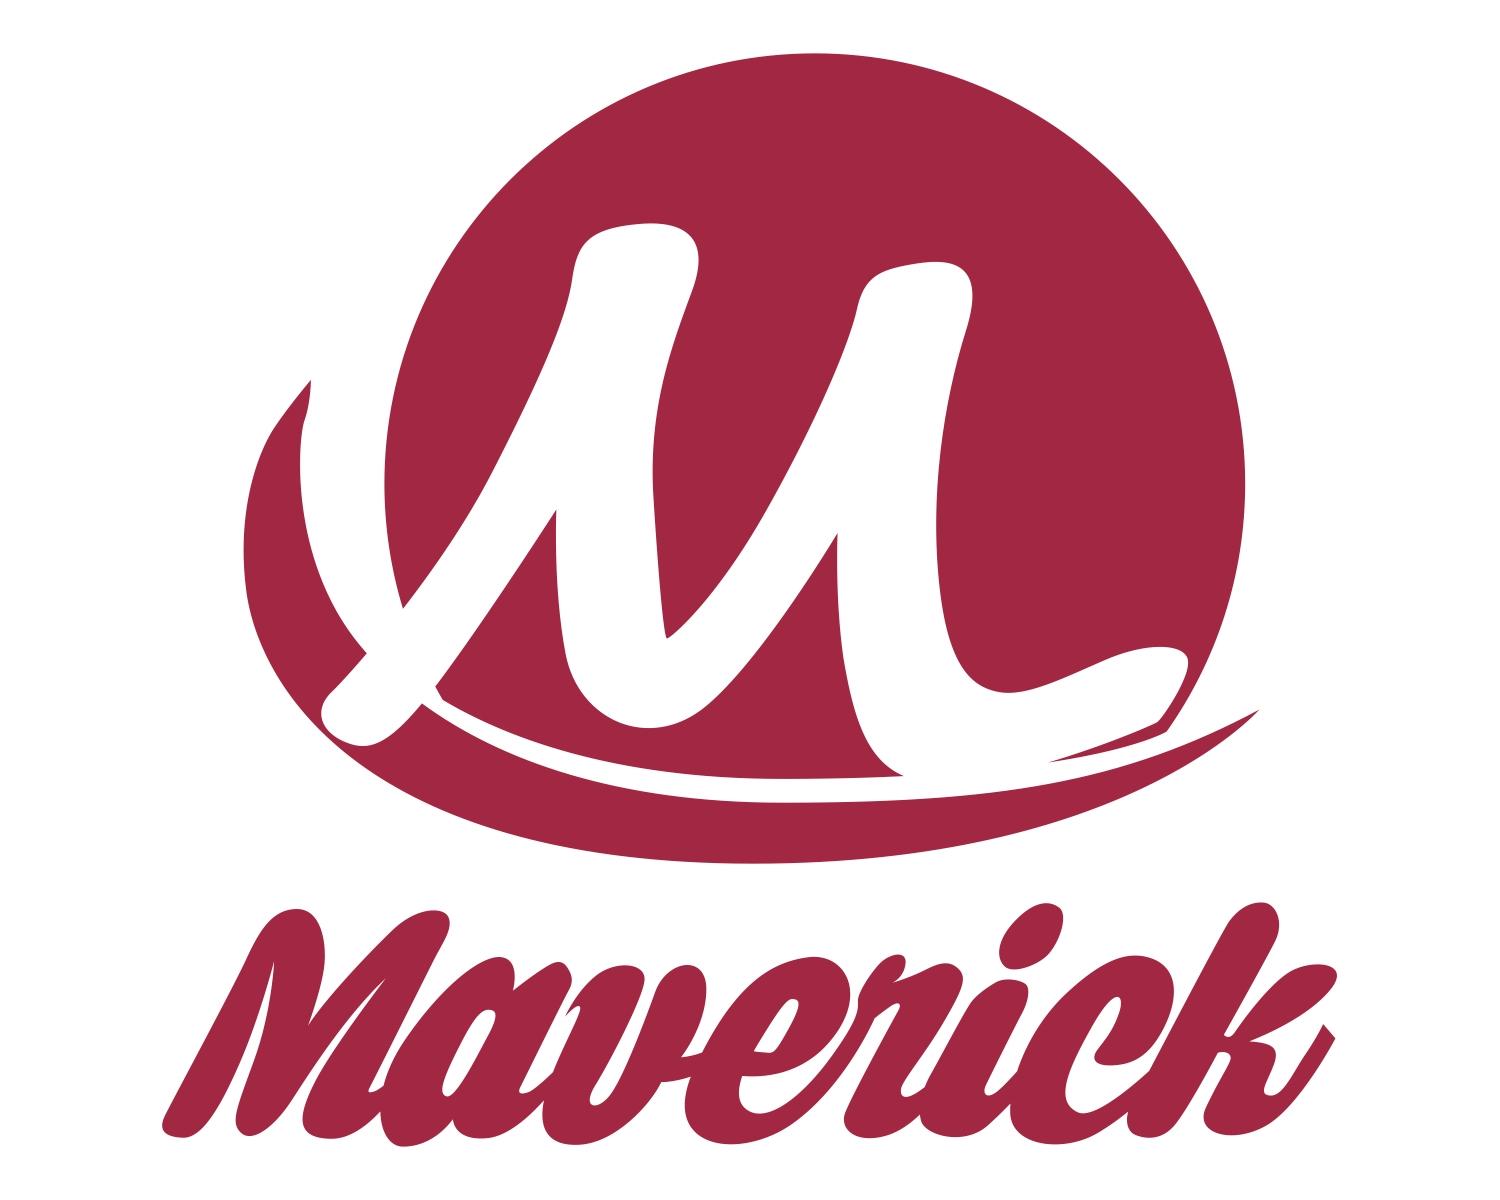 Ohio's Maverick Volleyball Joins LOVB